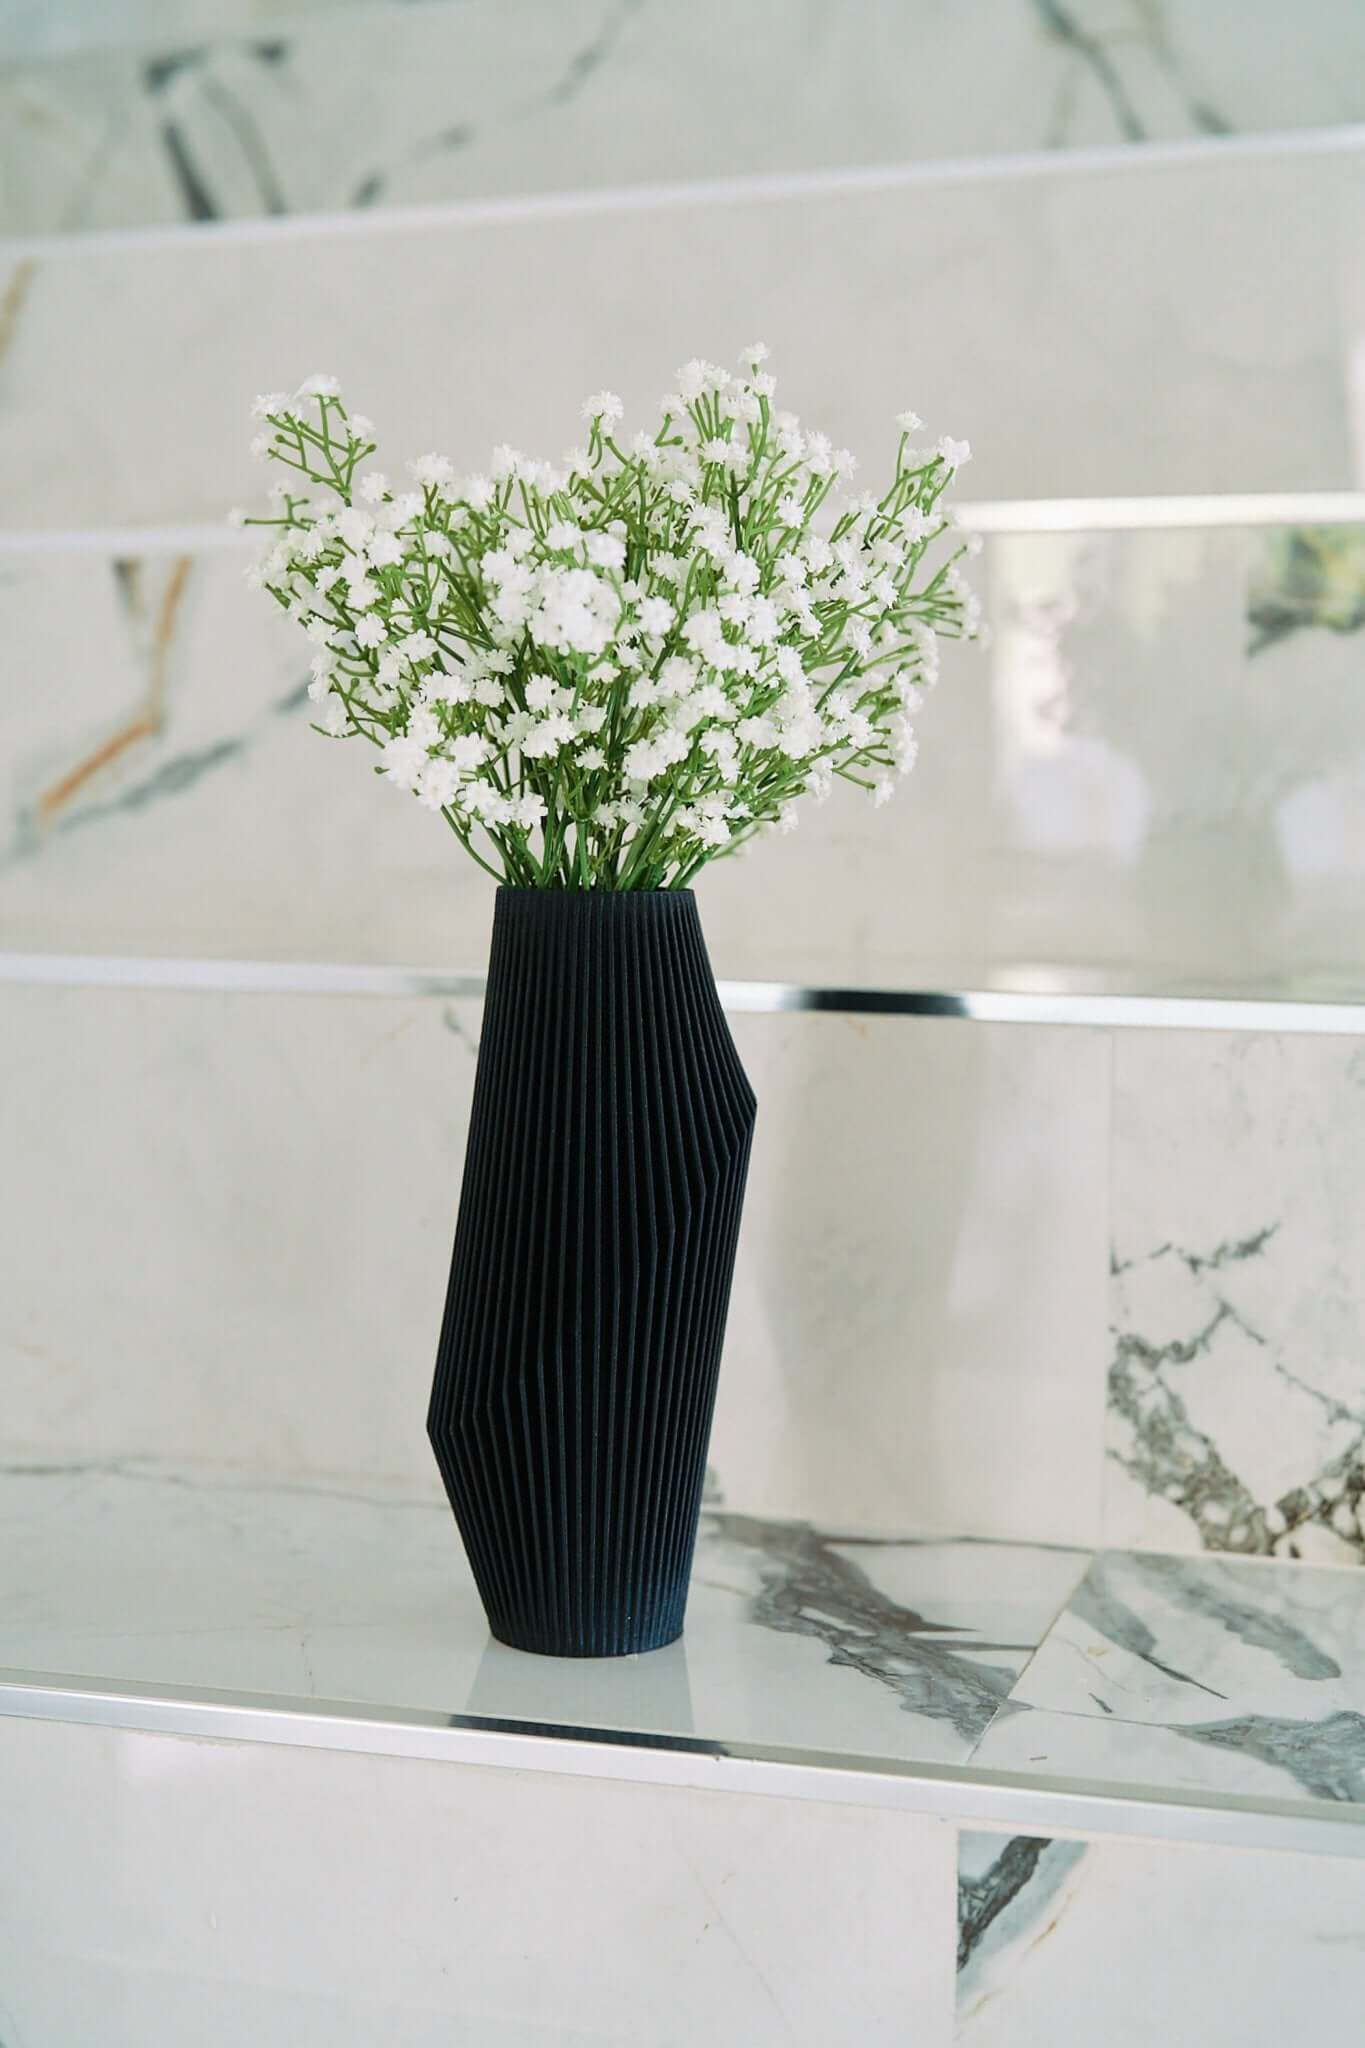 NOVA Black Textured Vase with white flowers.